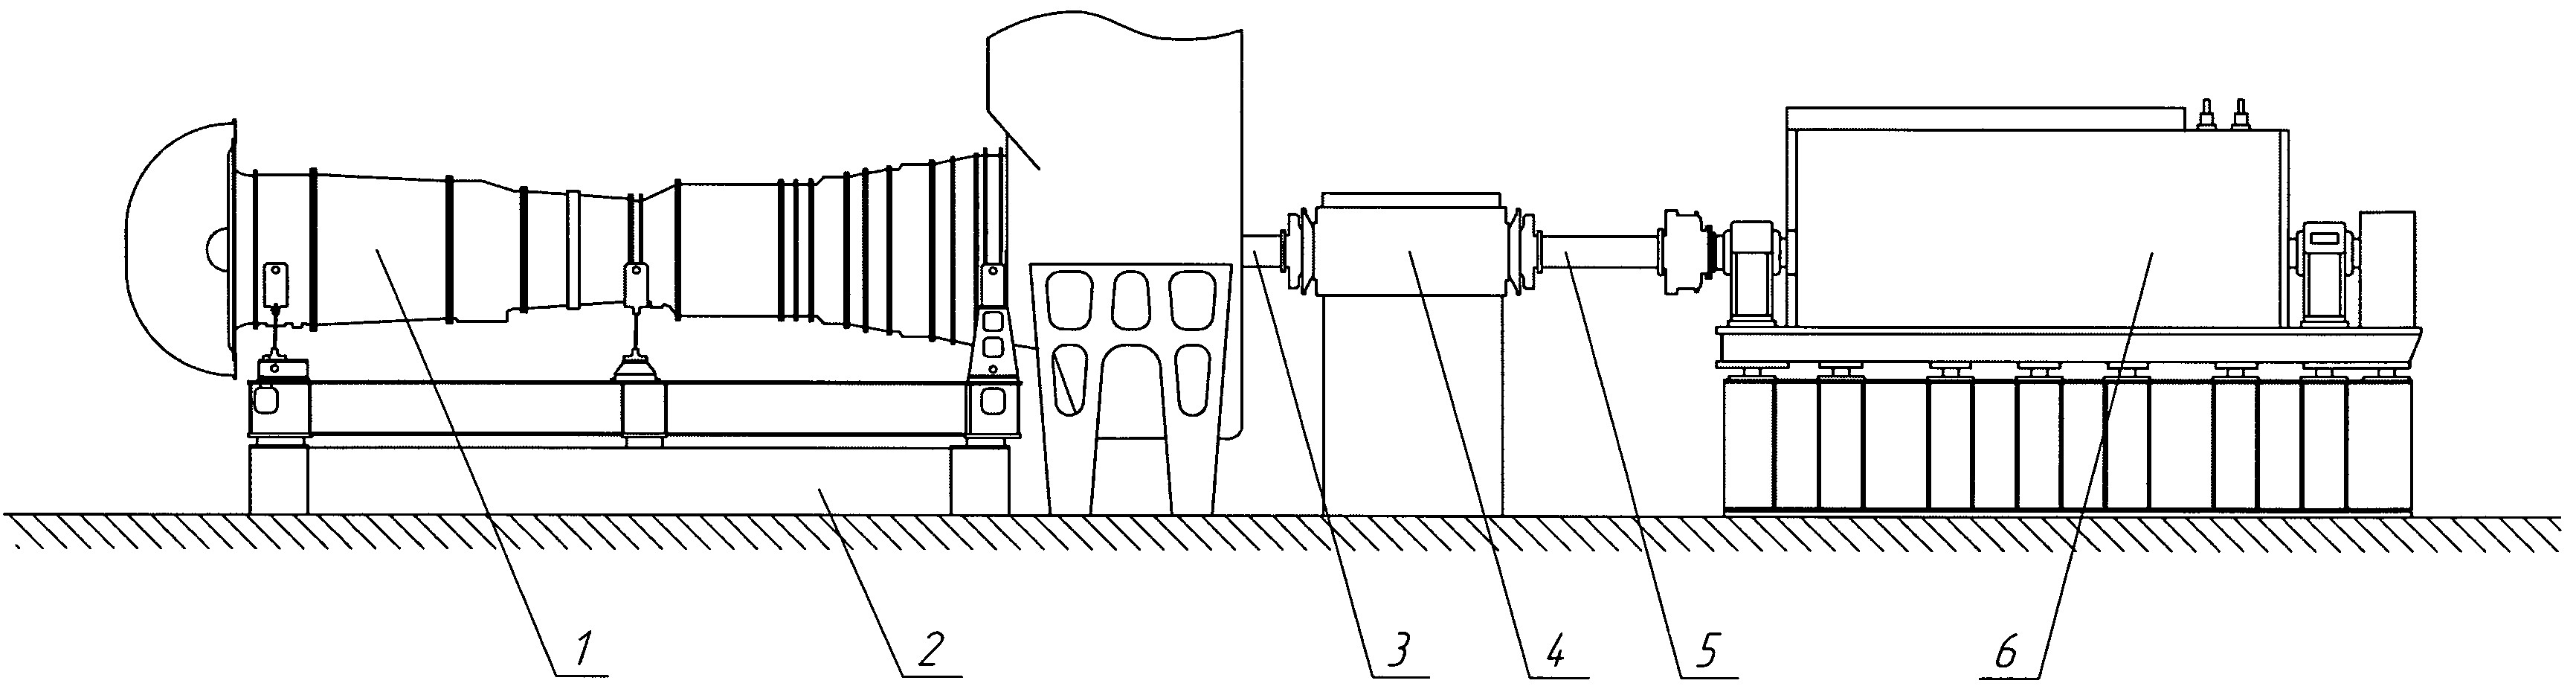 Turboshaft Engine Diagram Ru U1 Test Bench Turboshaft Gas Turbine Engines Google Patents Of Turboshaft Engine Diagram